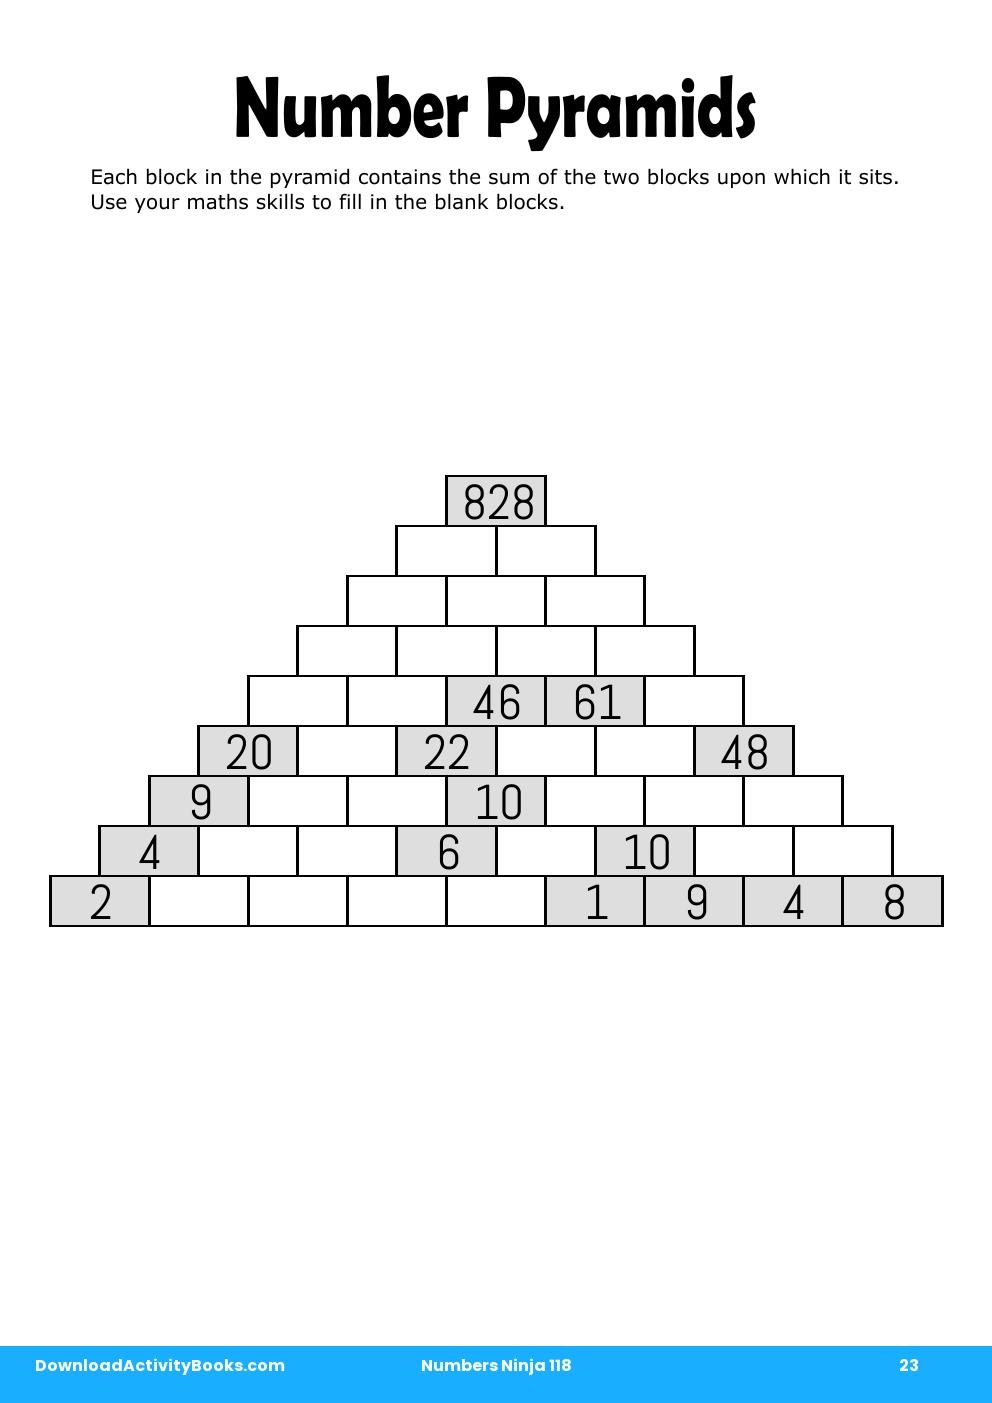 Number Pyramids in Numbers Ninja 118